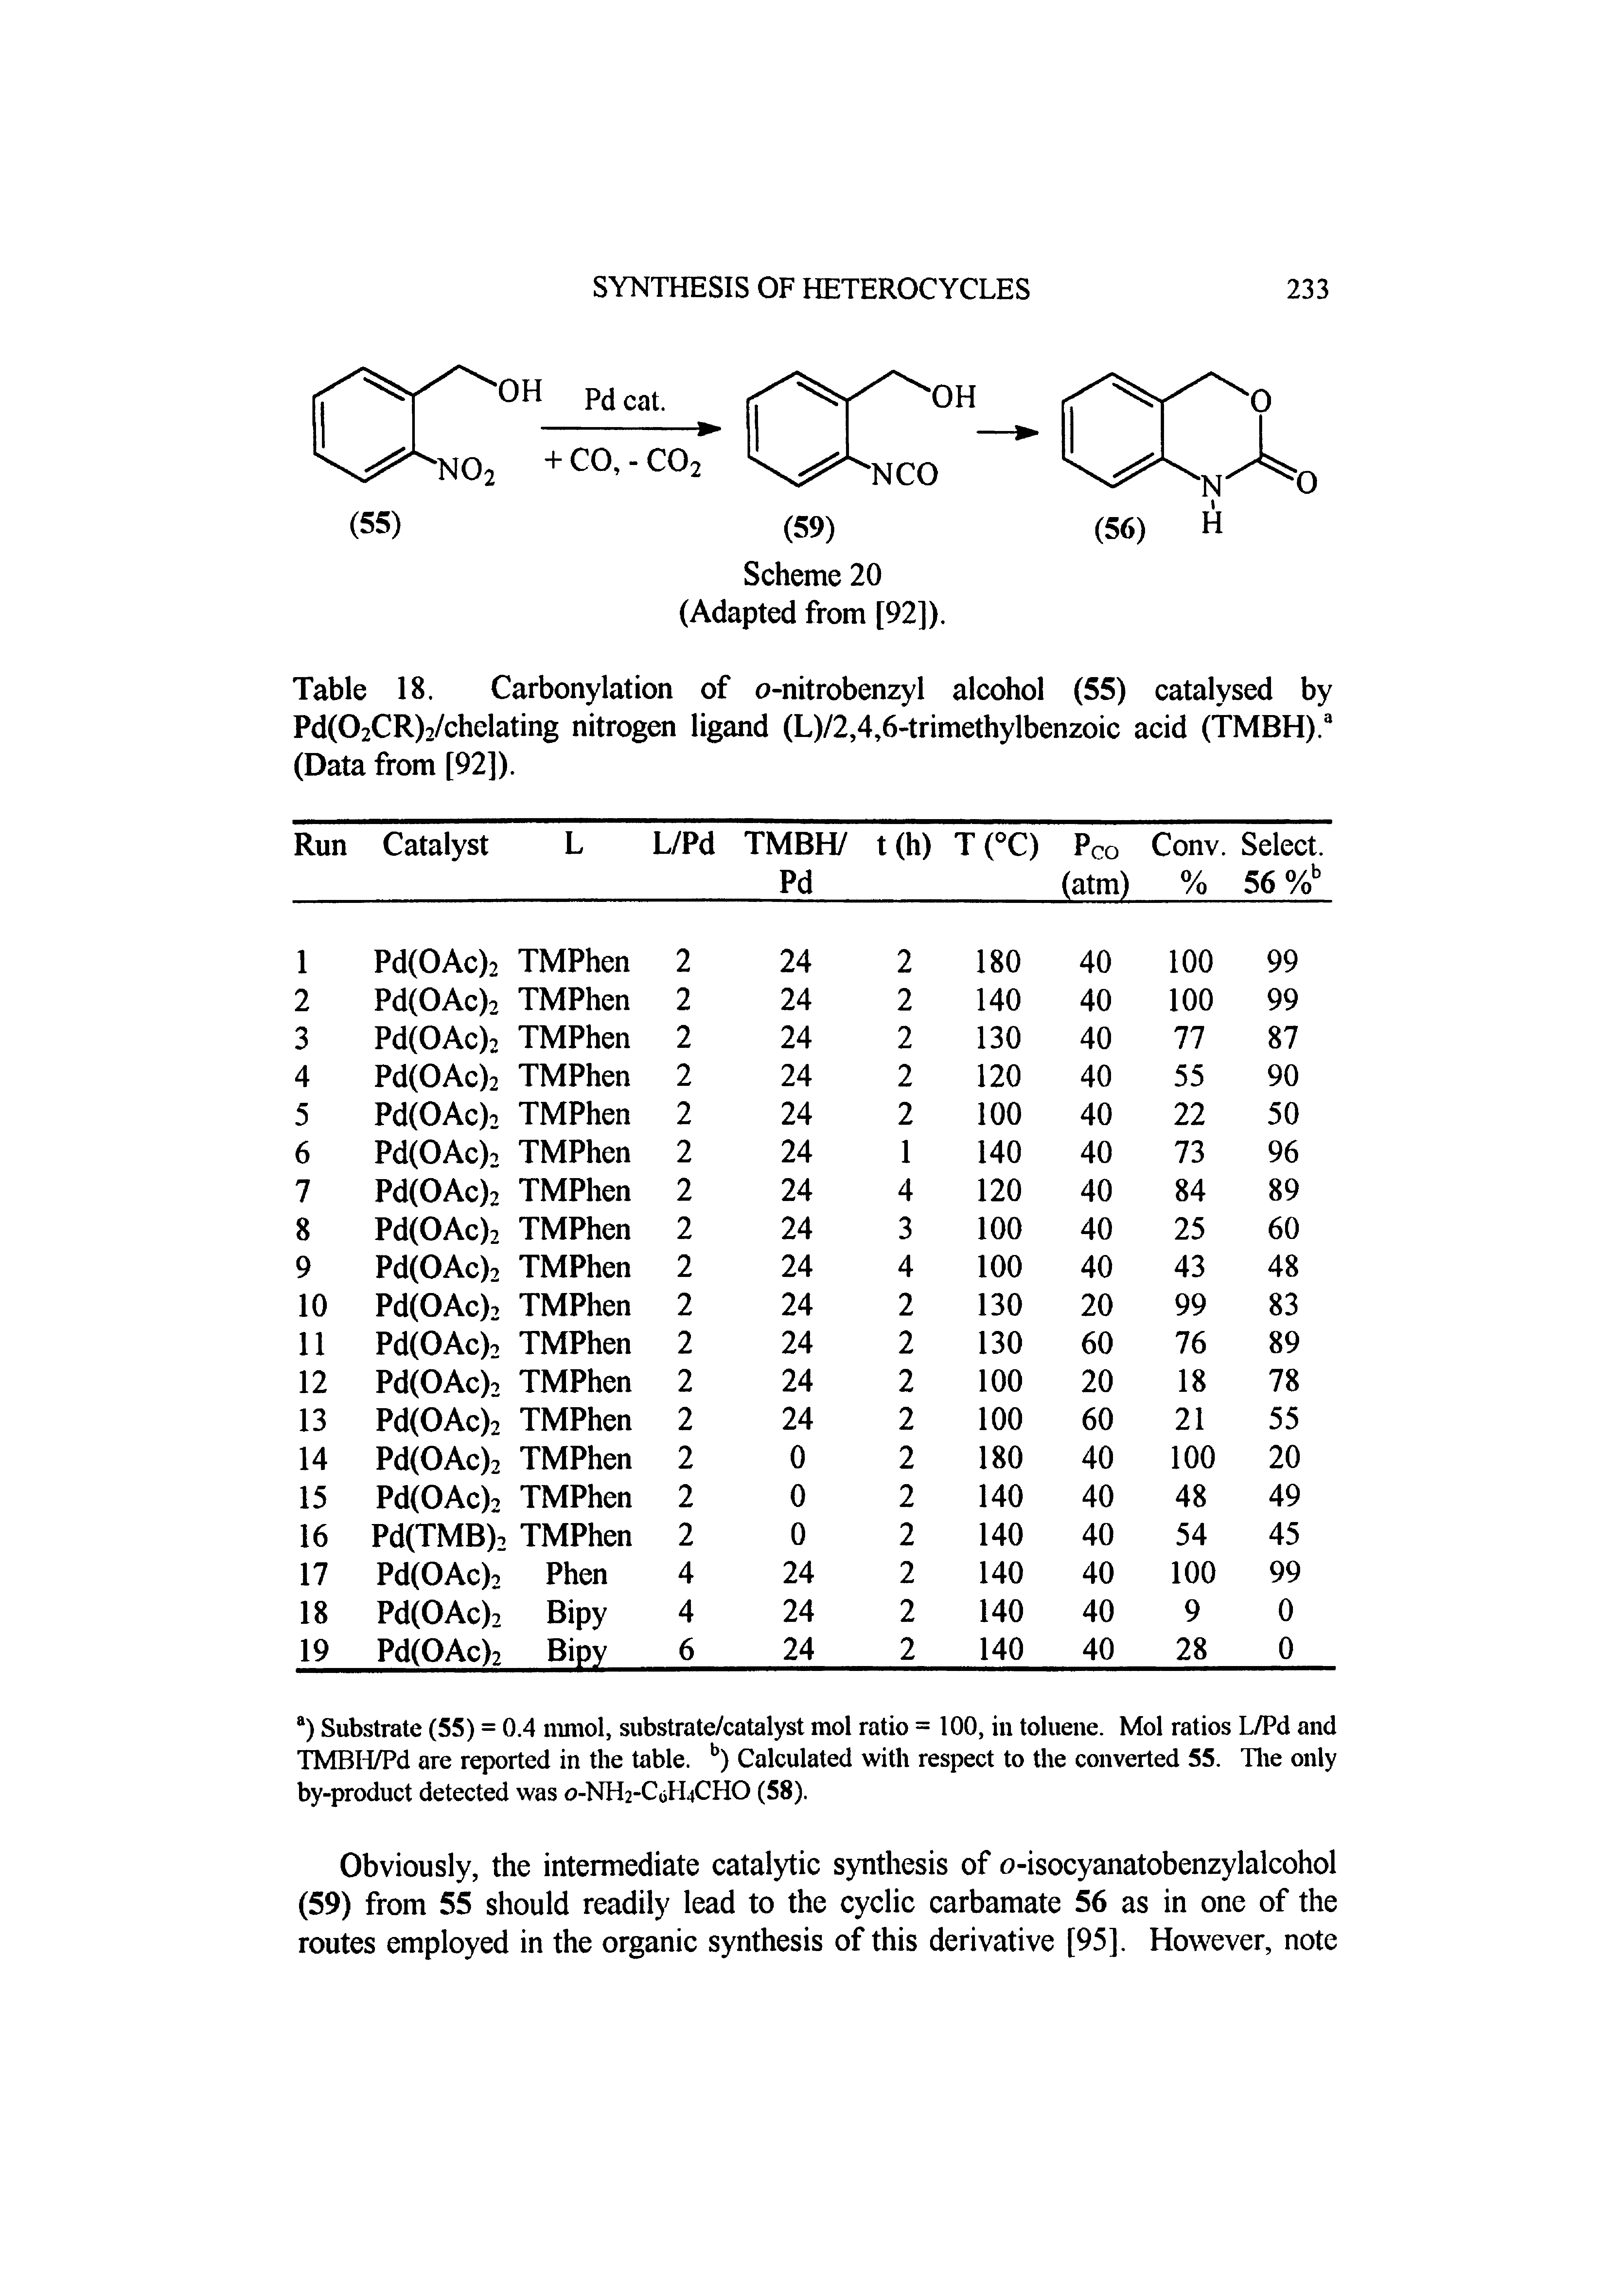 Table 18. Carbonylation of o-nitrobenzyl alcohol (55) catalysed by Pd(02CR)2/chelating nitrogen ligand (L)/2,4,6-trimethylbenzoic acid (TMBH). (Data from [92]).